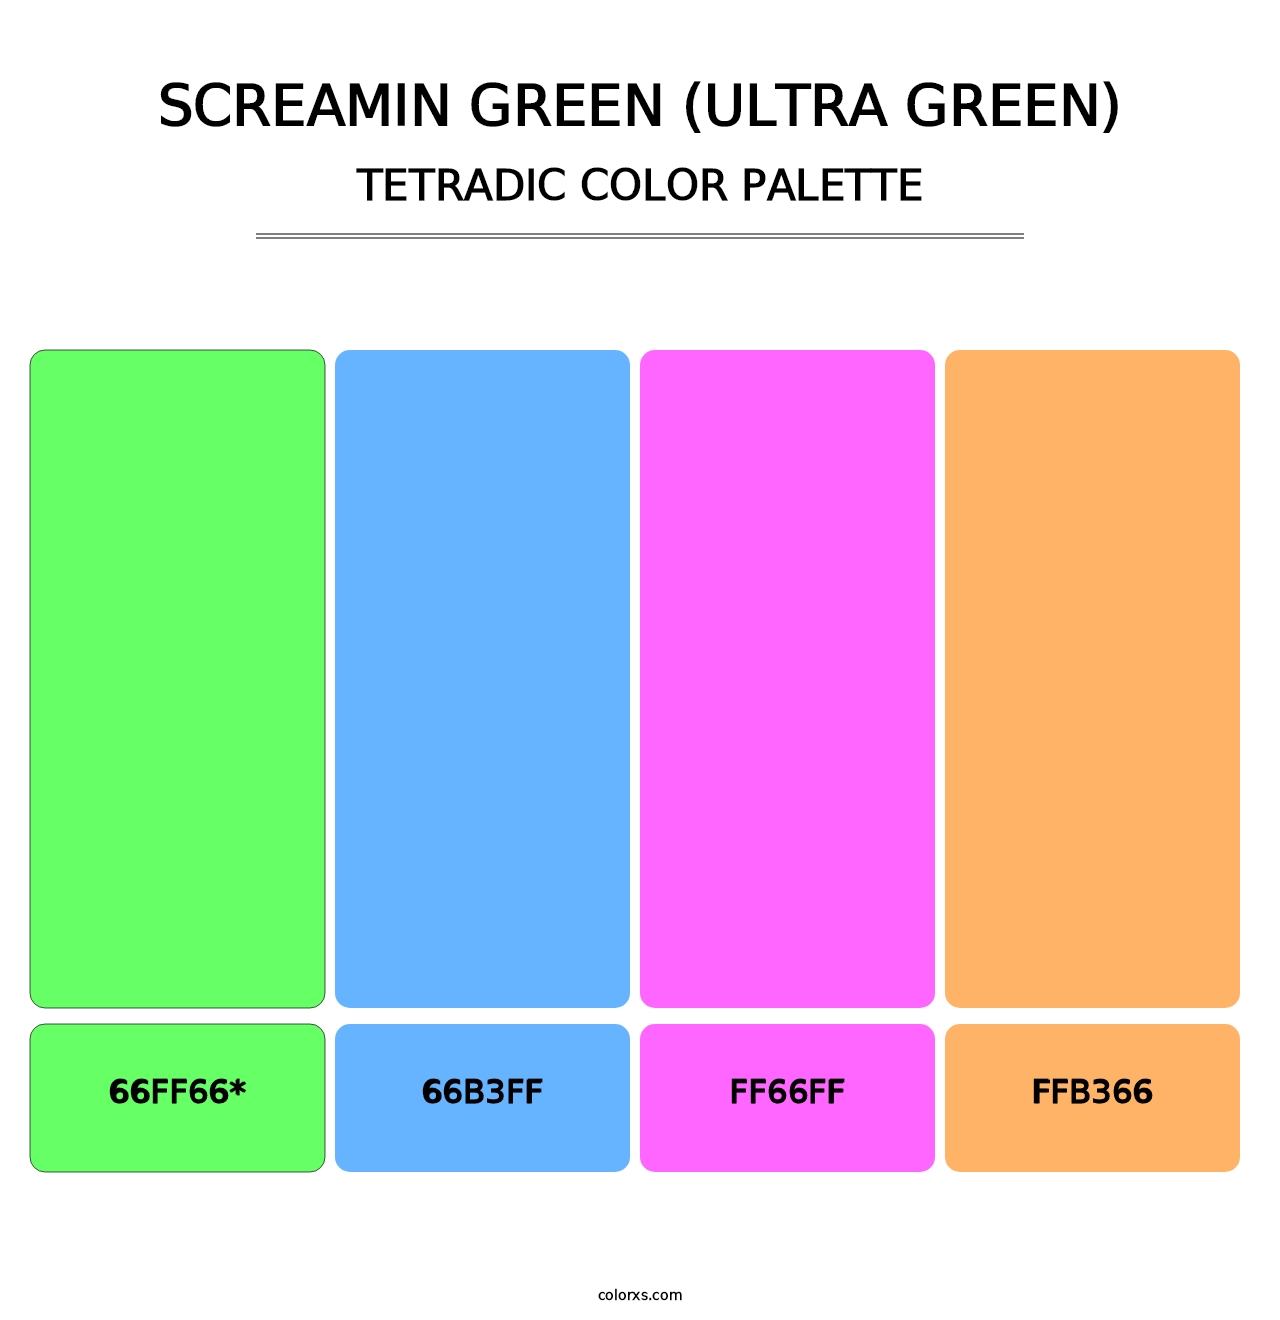 Screamin Green (Ultra Green) - Tetradic Color Palette